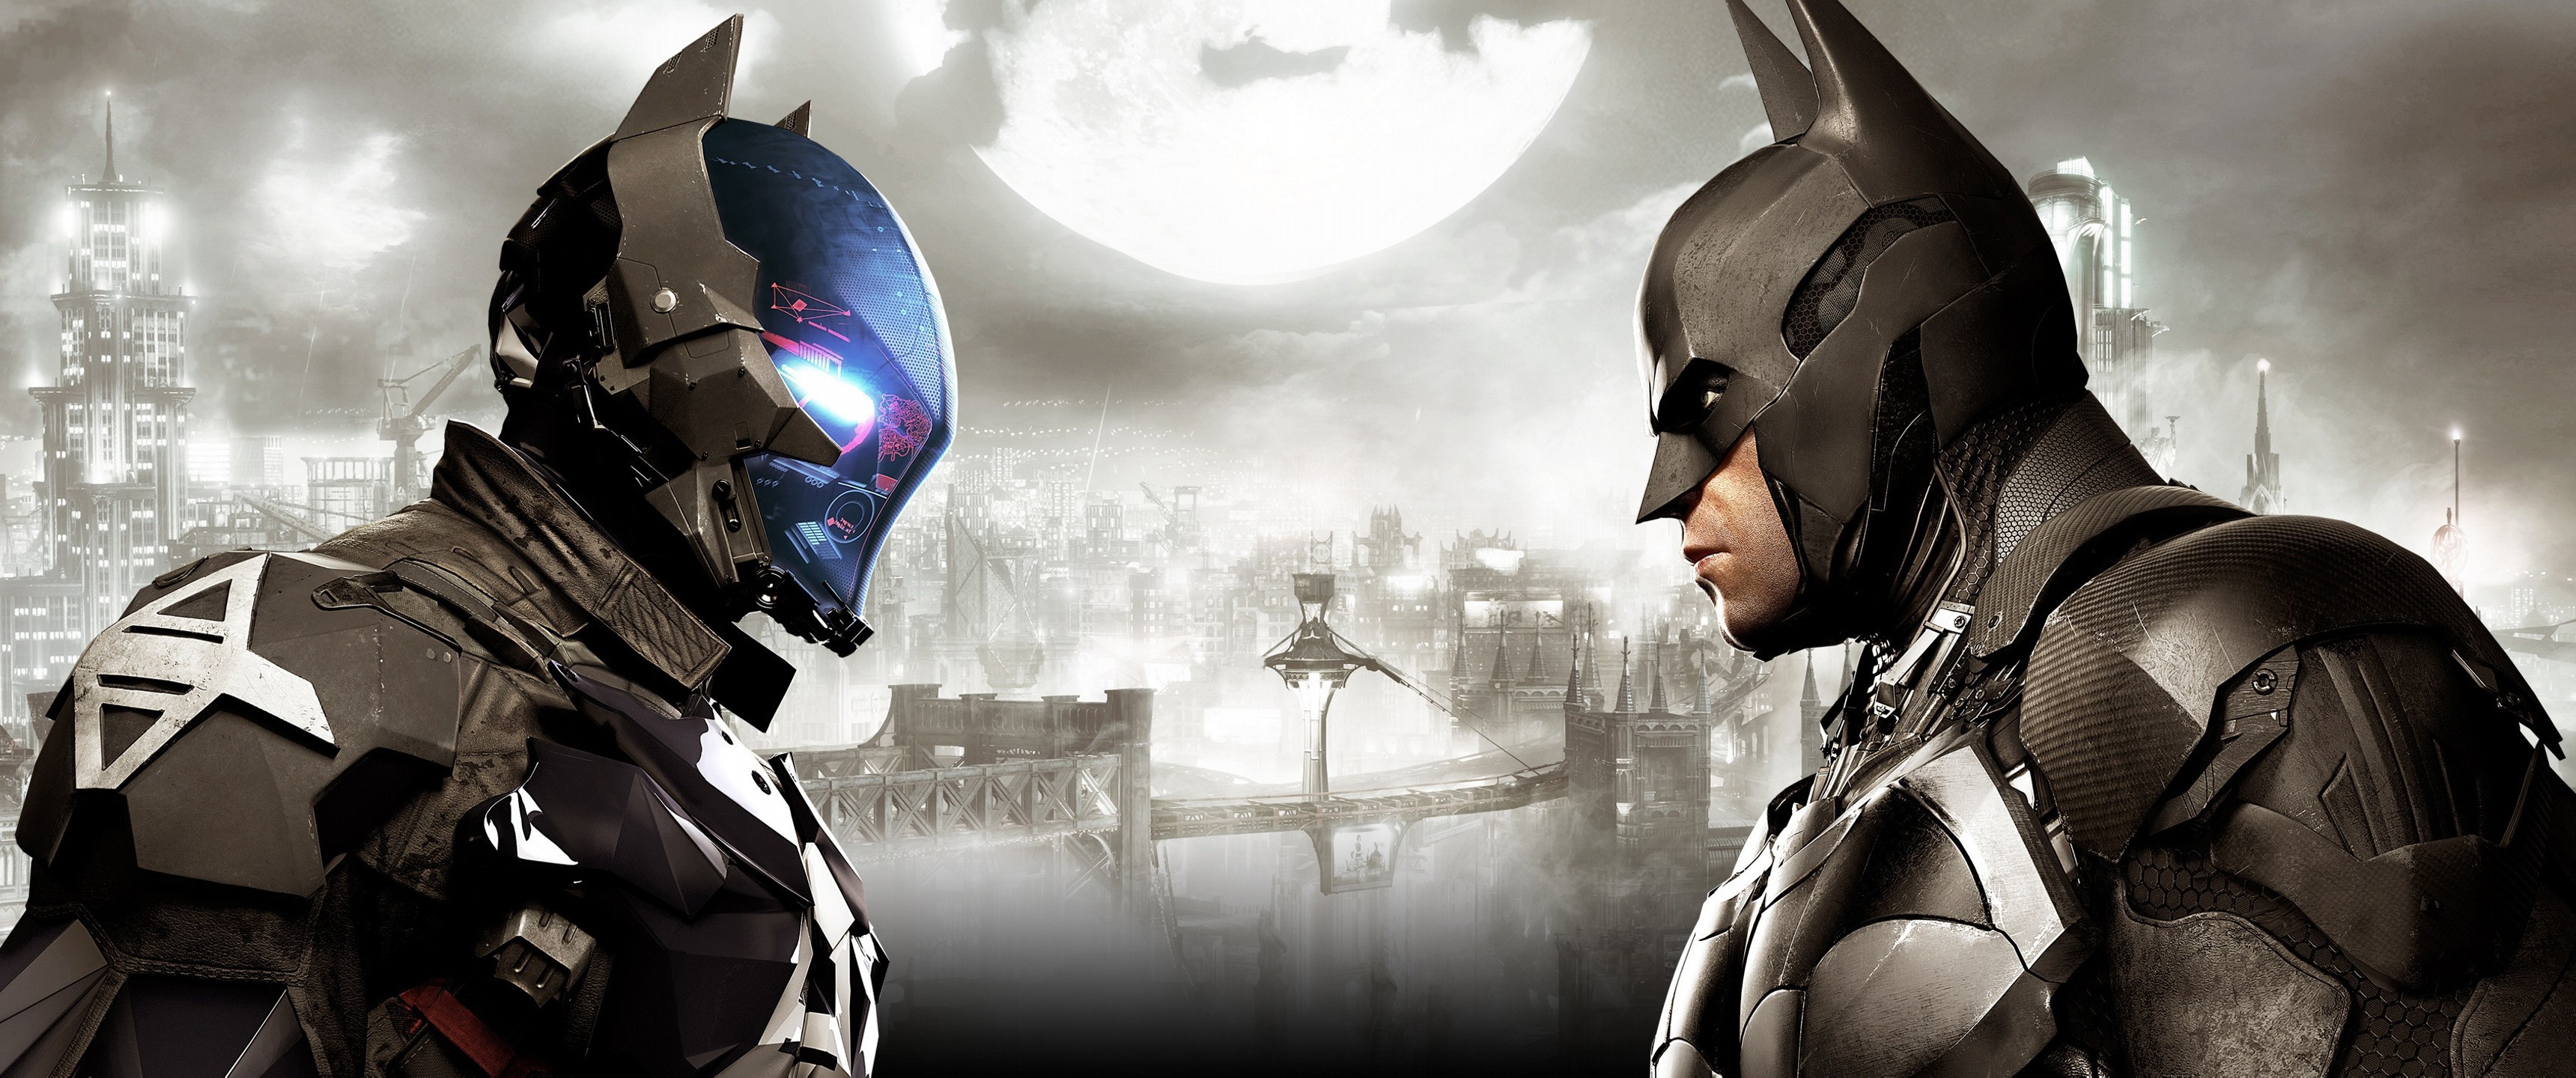 batman arkham knight wallpaper,action adventure game,fictional character,batman,cg artwork,superhero